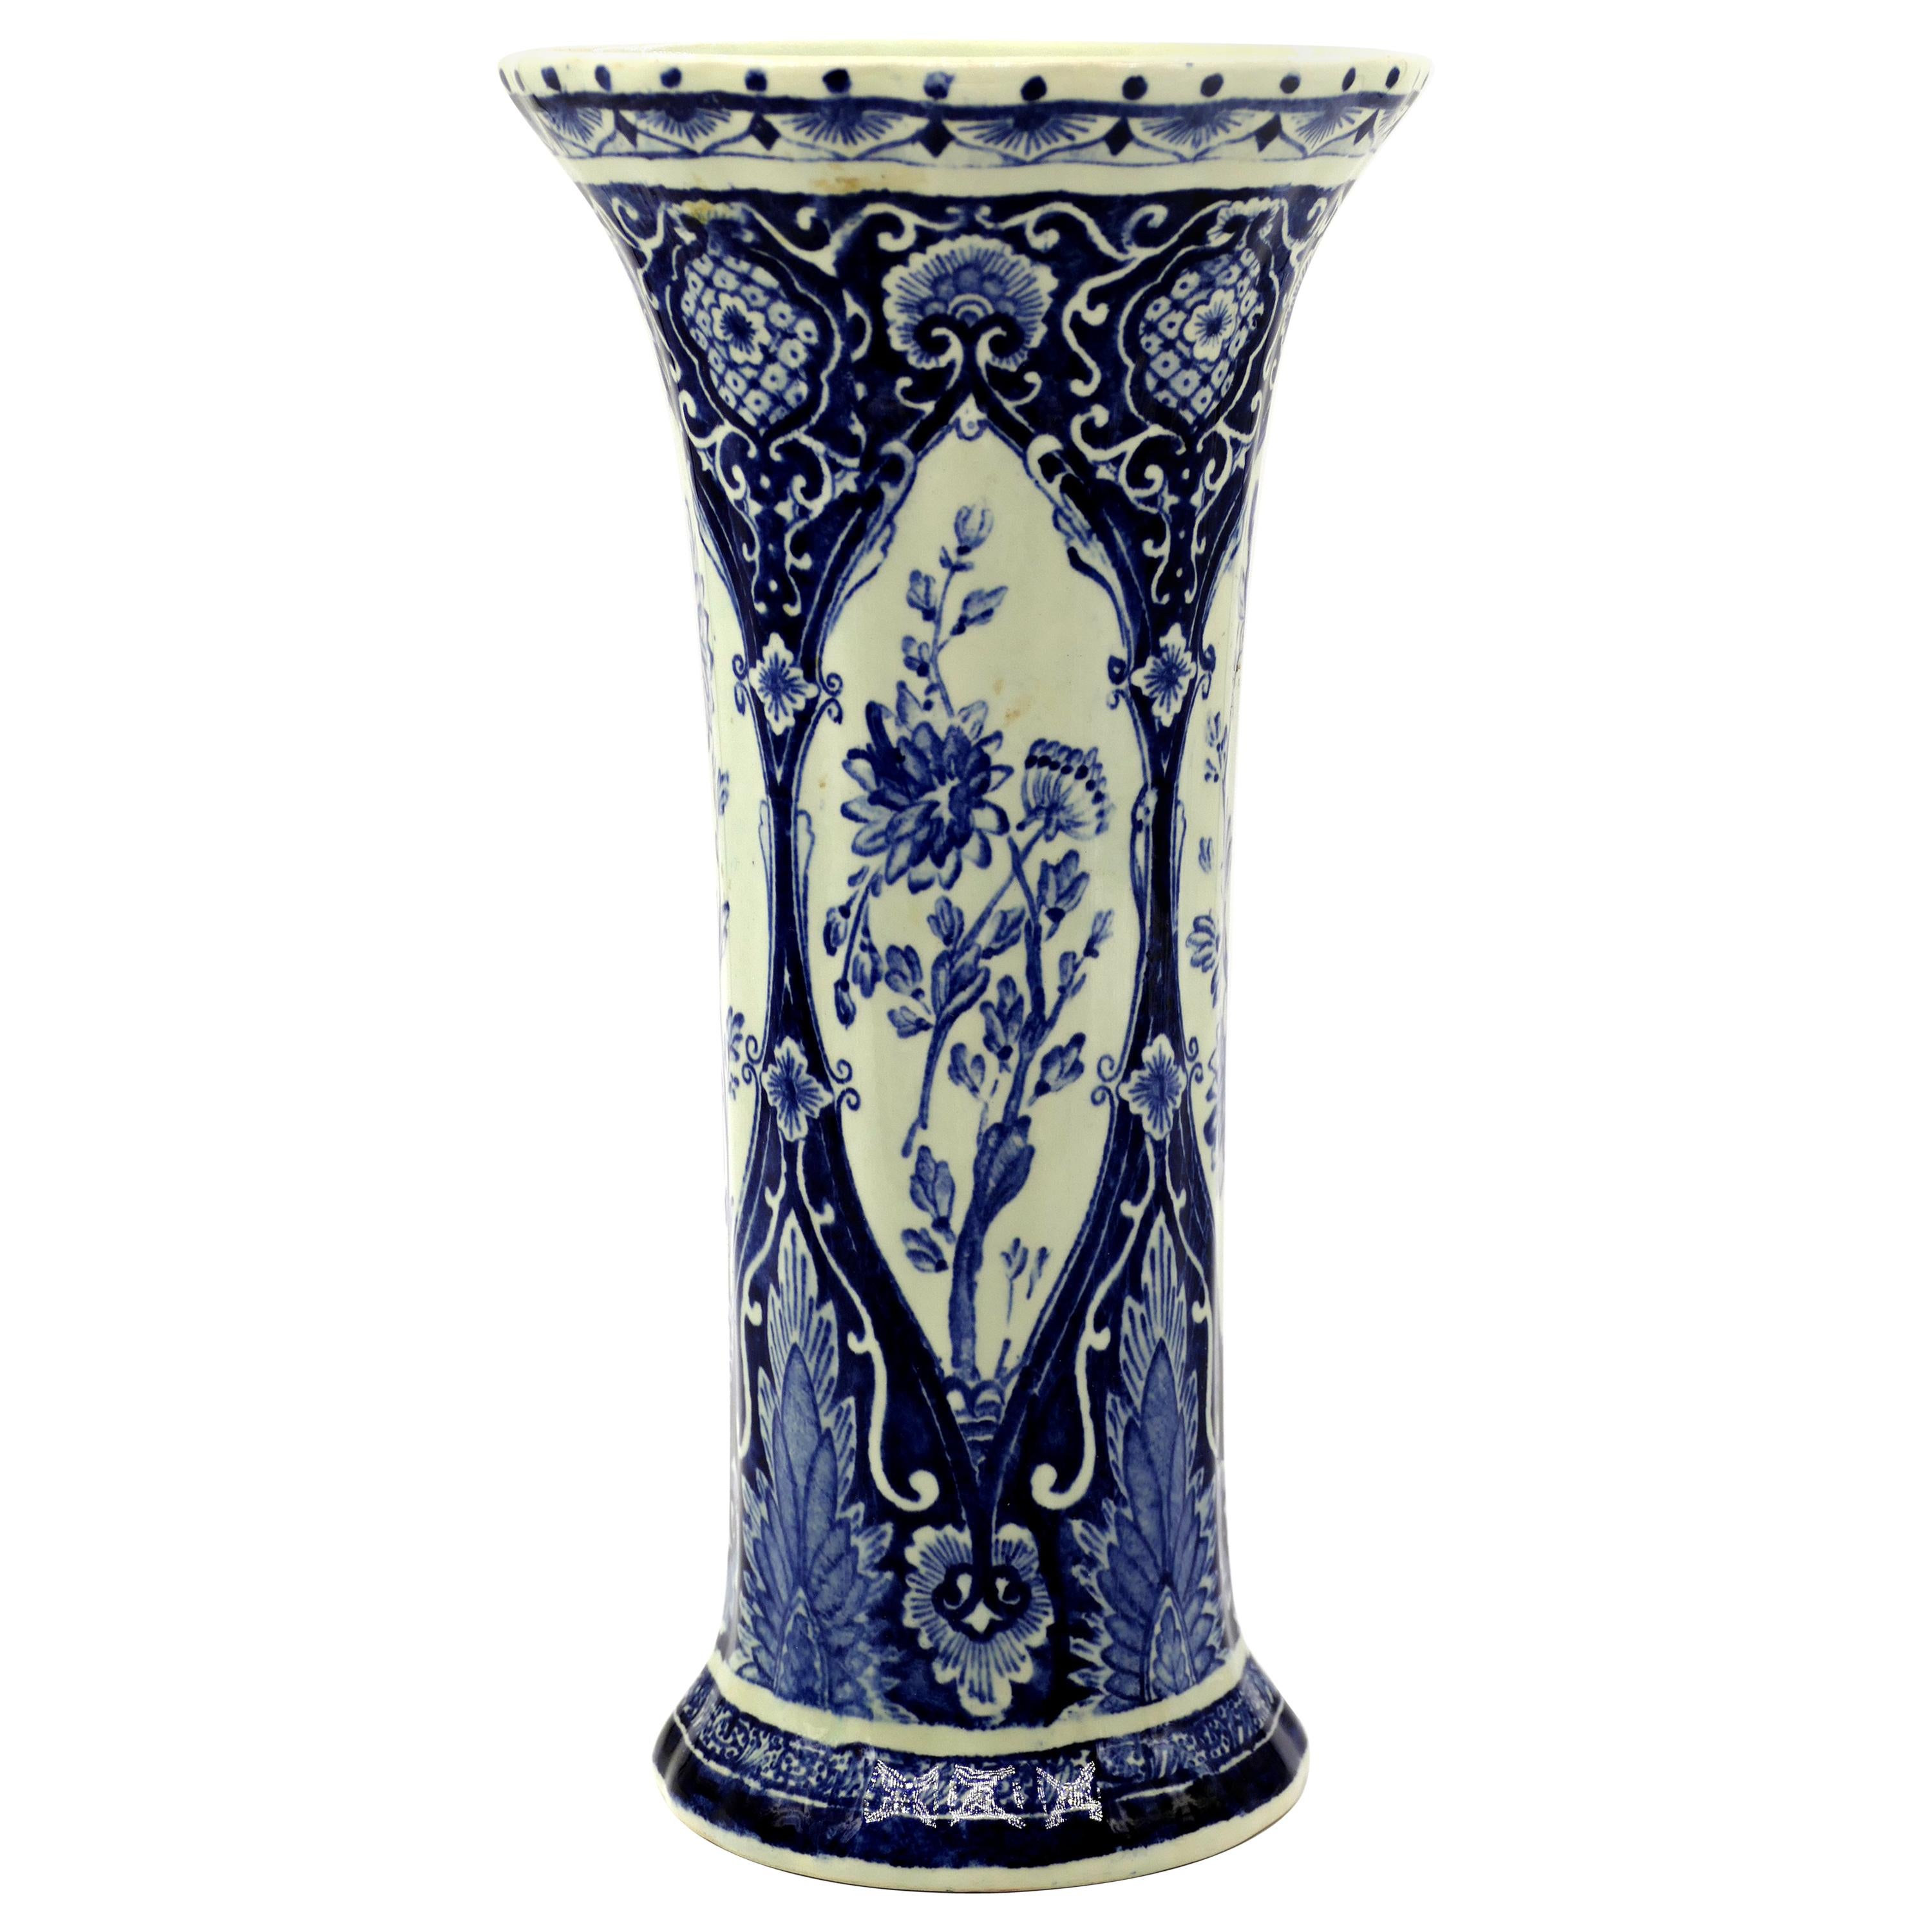 Boch Delft Ceramic Vase, Early 20th Century